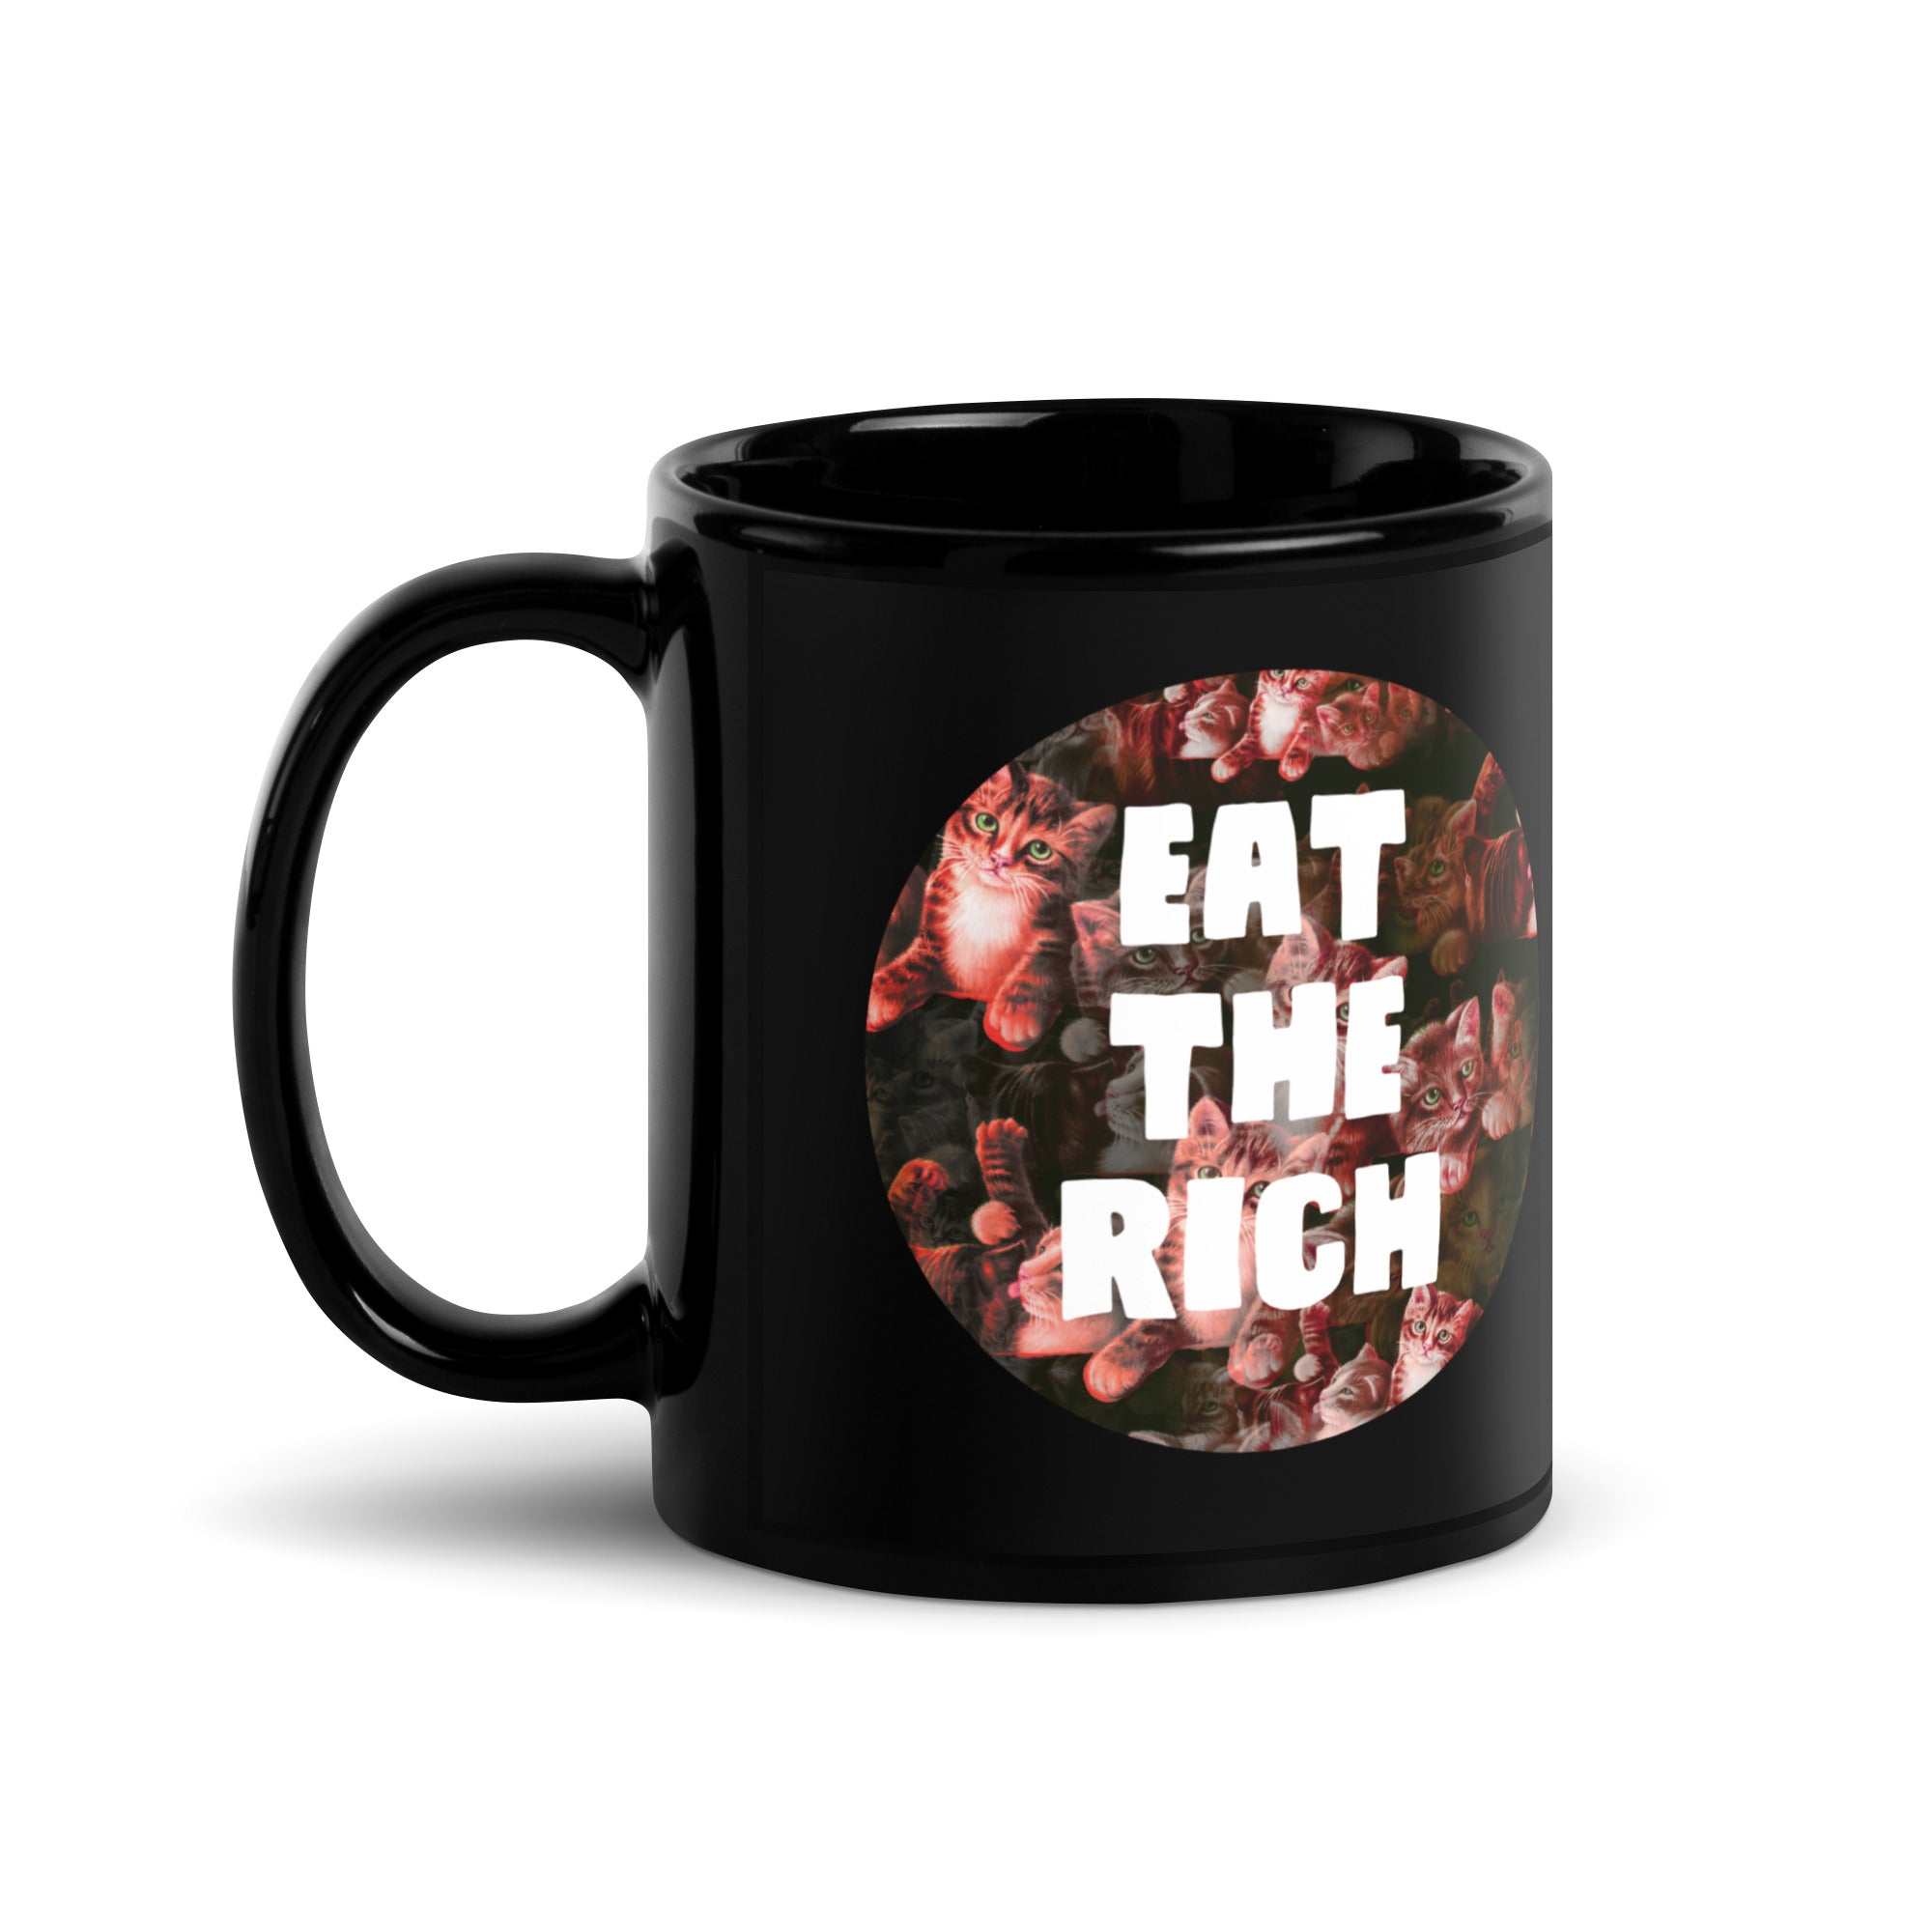 Eat the Rich Cat Mug